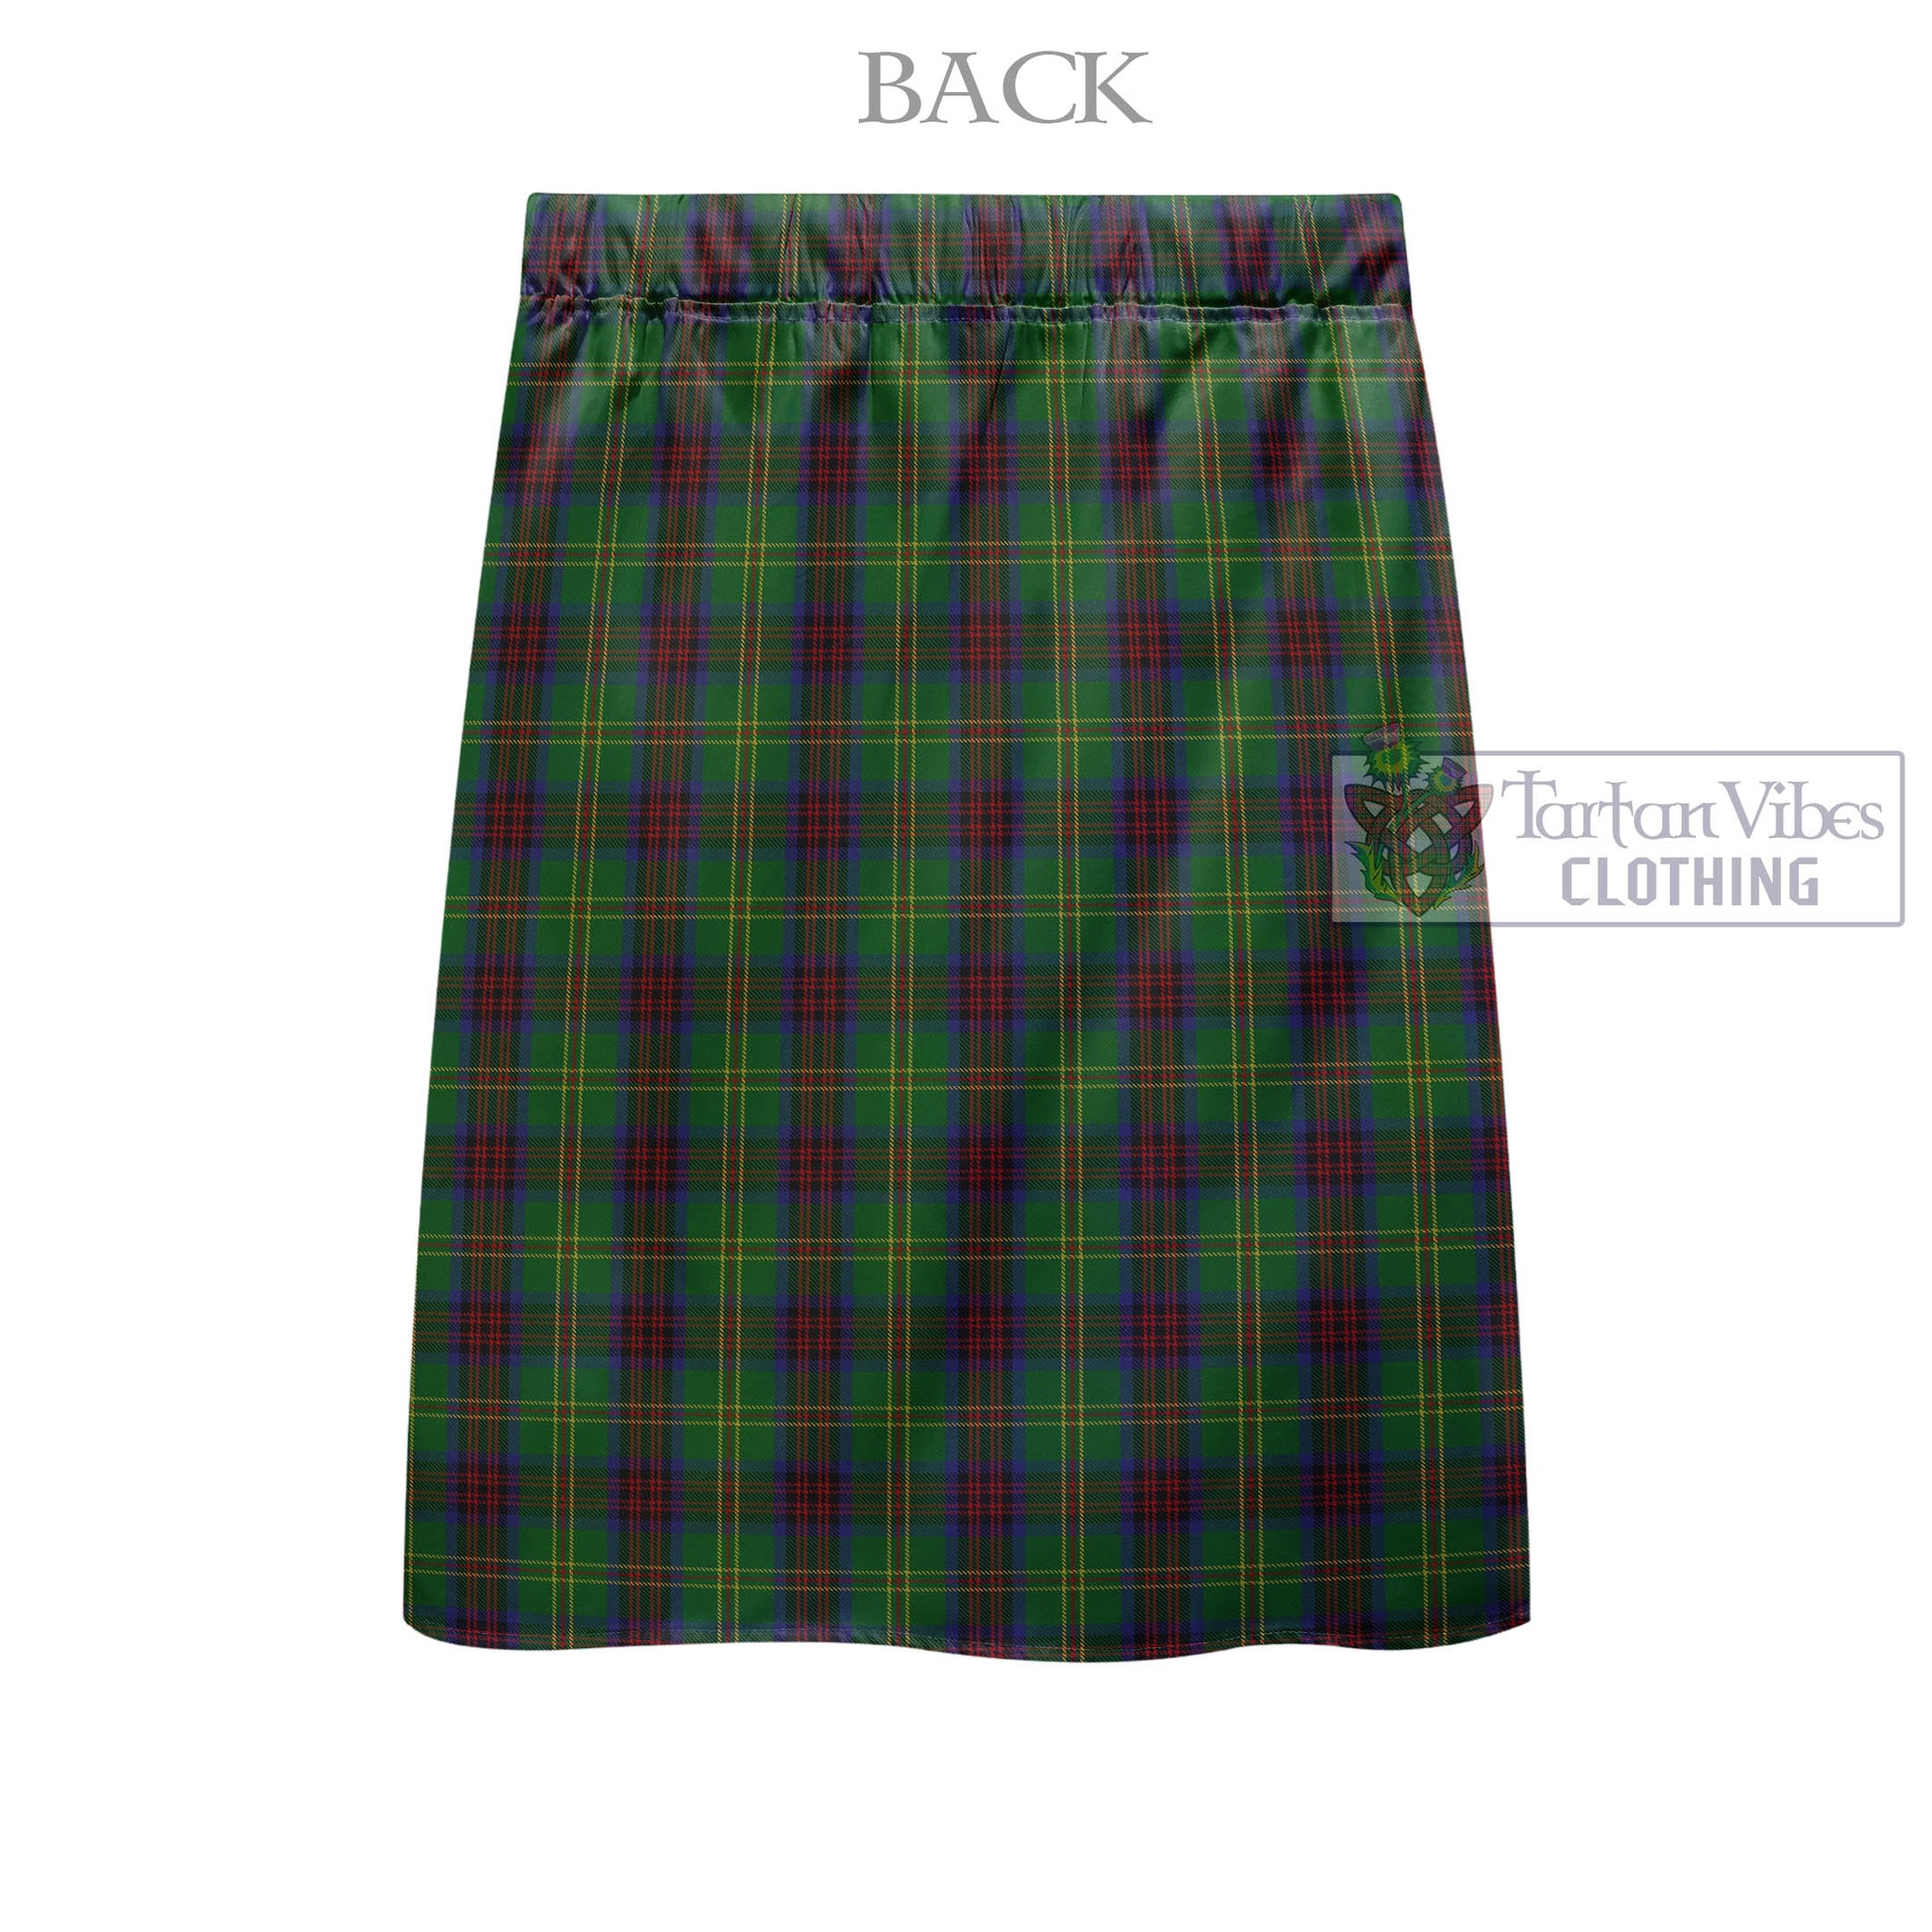 Tartan Vibes Clothing Connolly Hunting Tartan Men's Pleated Skirt - Fashion Casual Retro Scottish Style